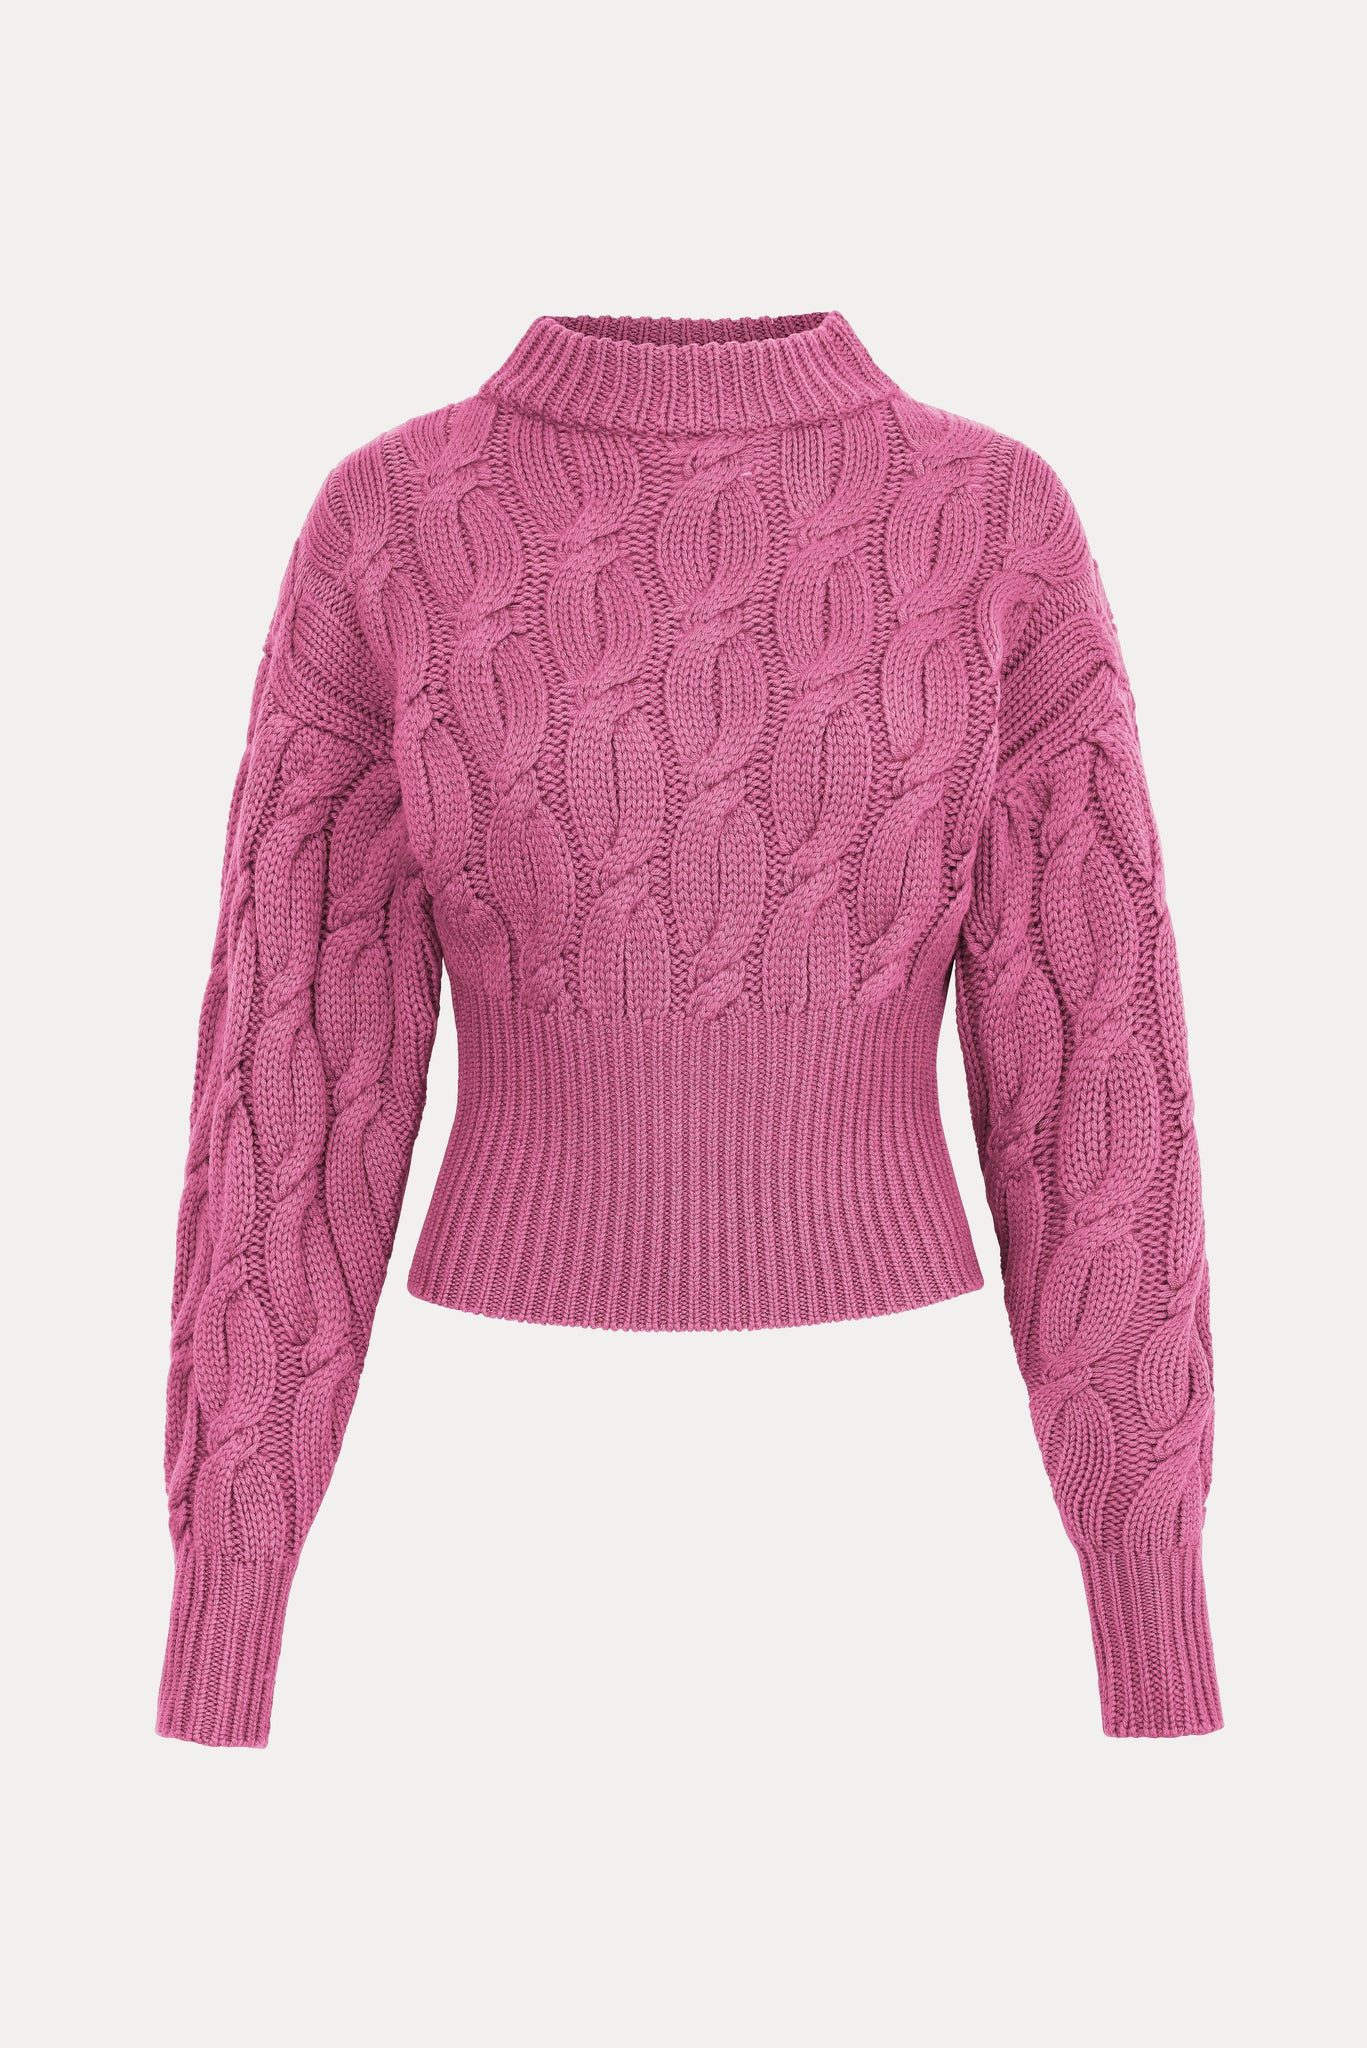 Hilda Sweater | Pink Cable Knit Sweater | Emilia Wickstead